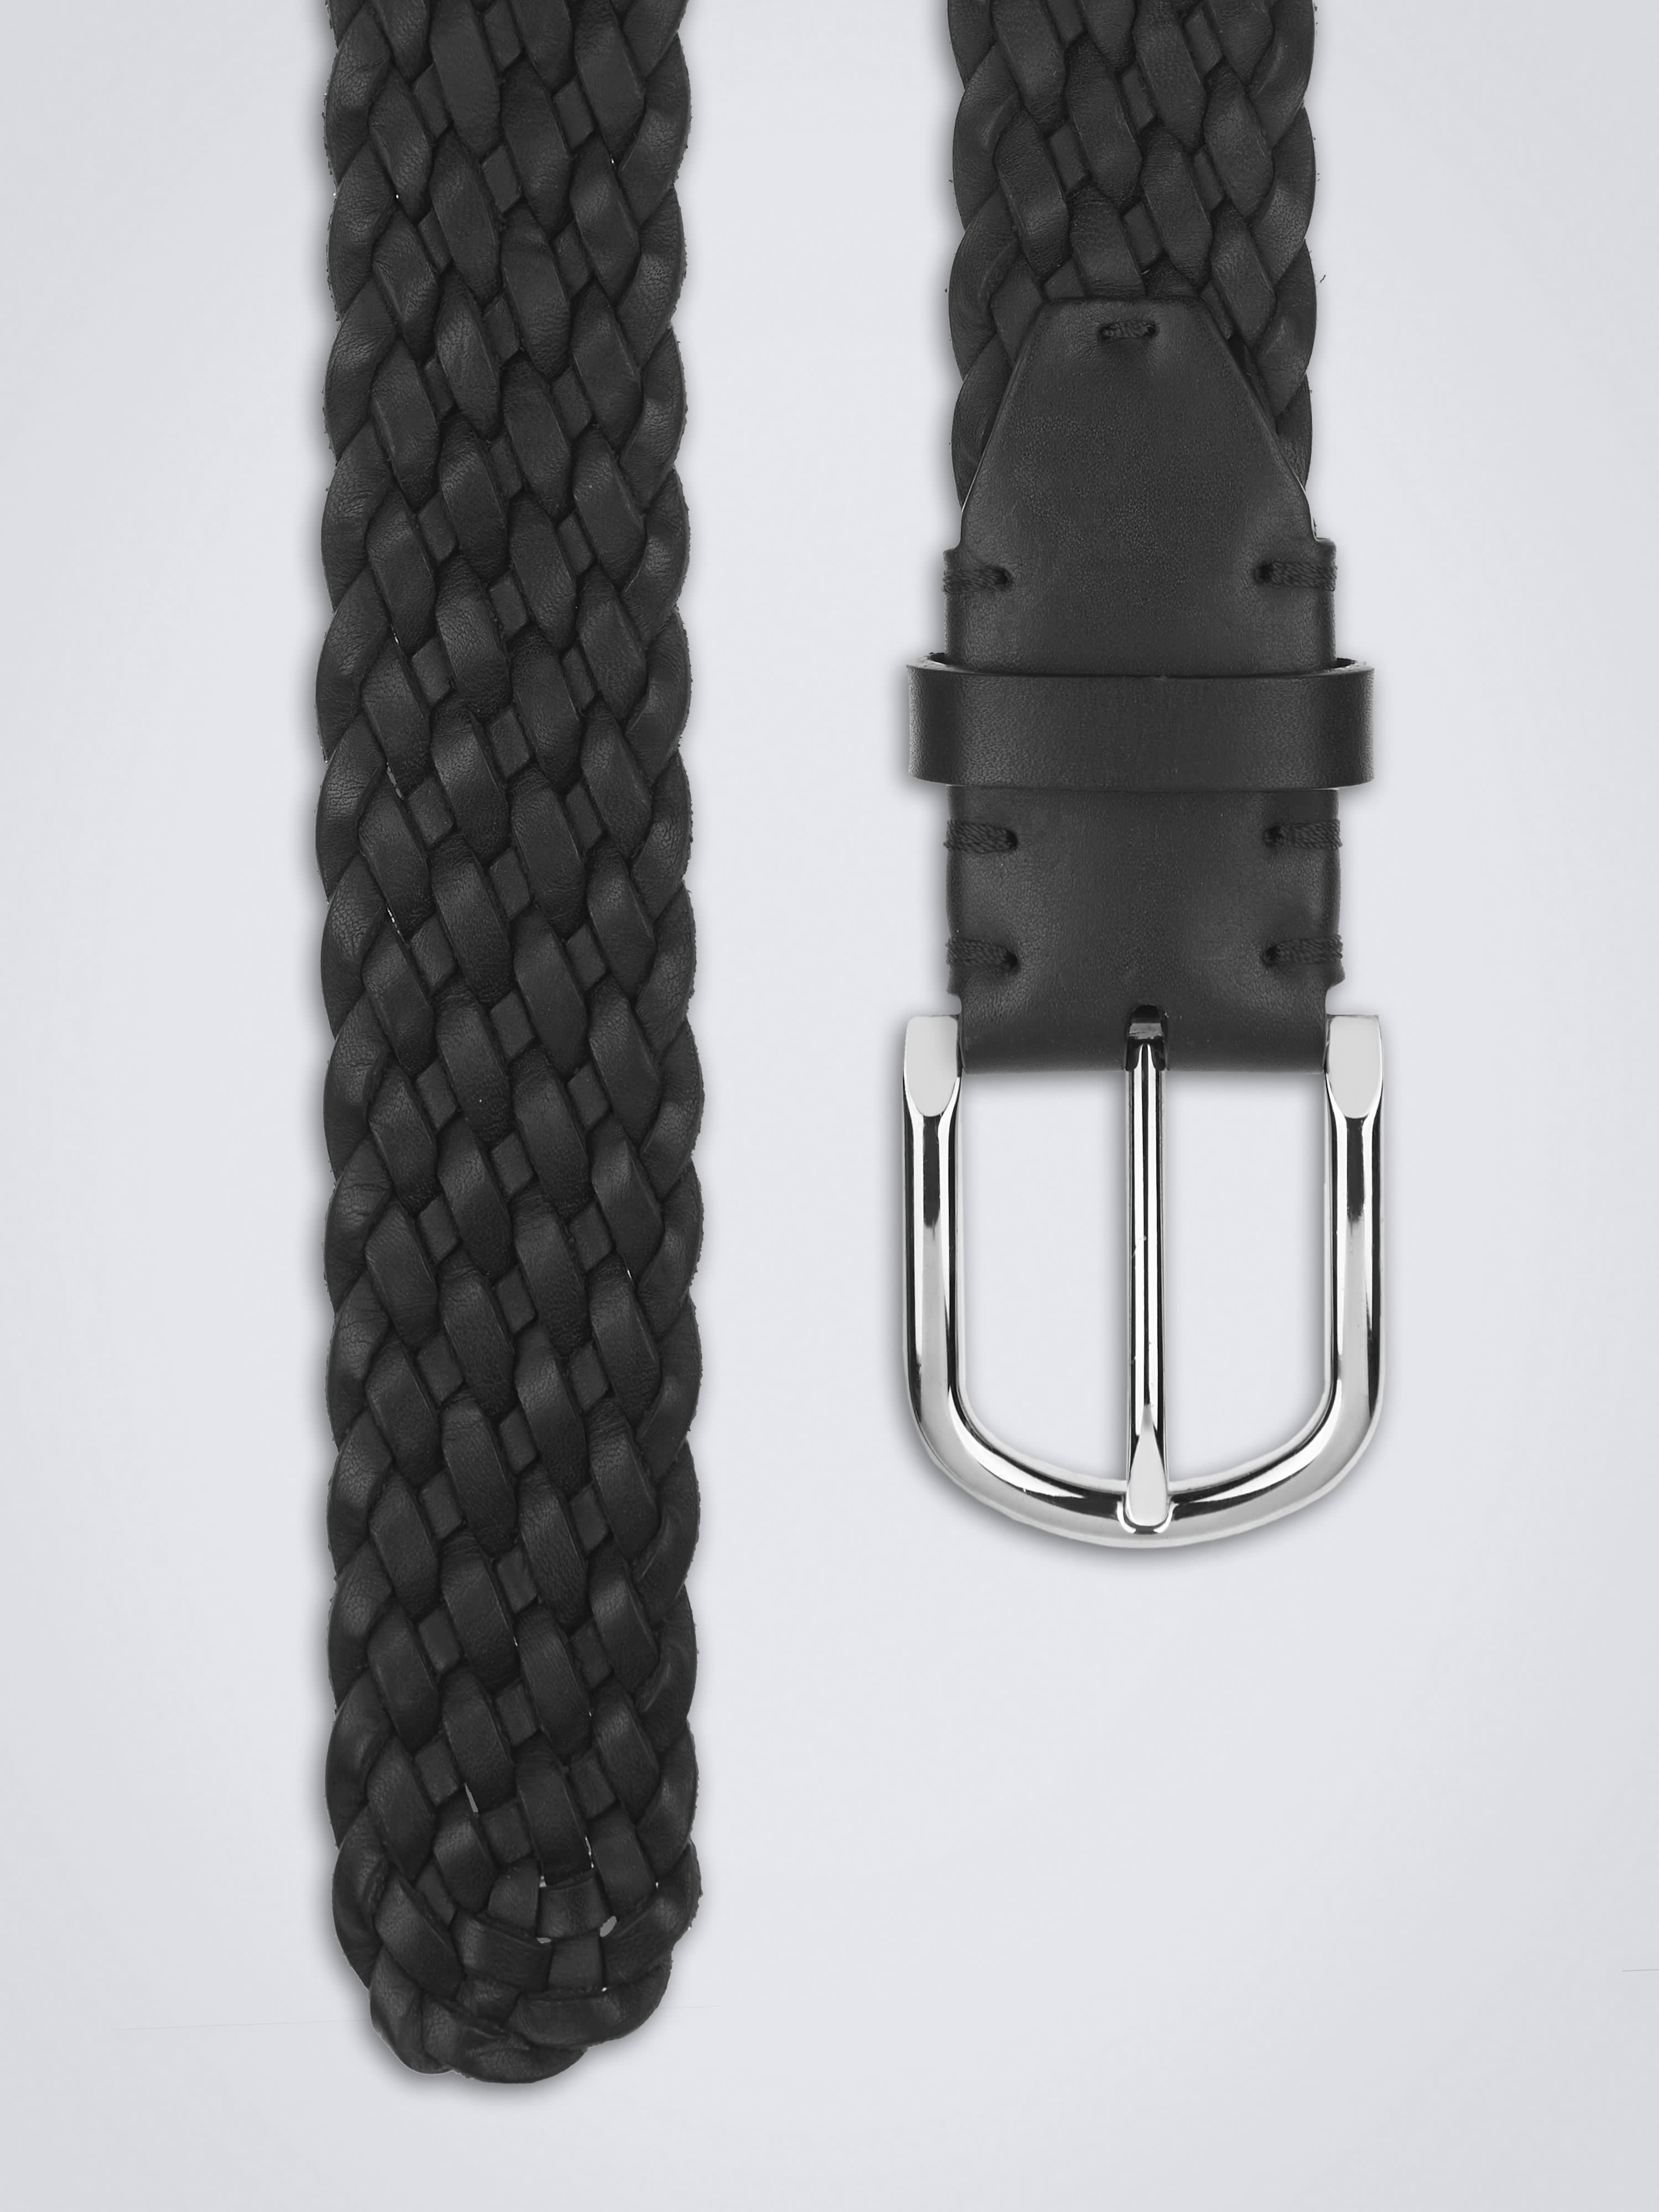 Black calf leather braided belt